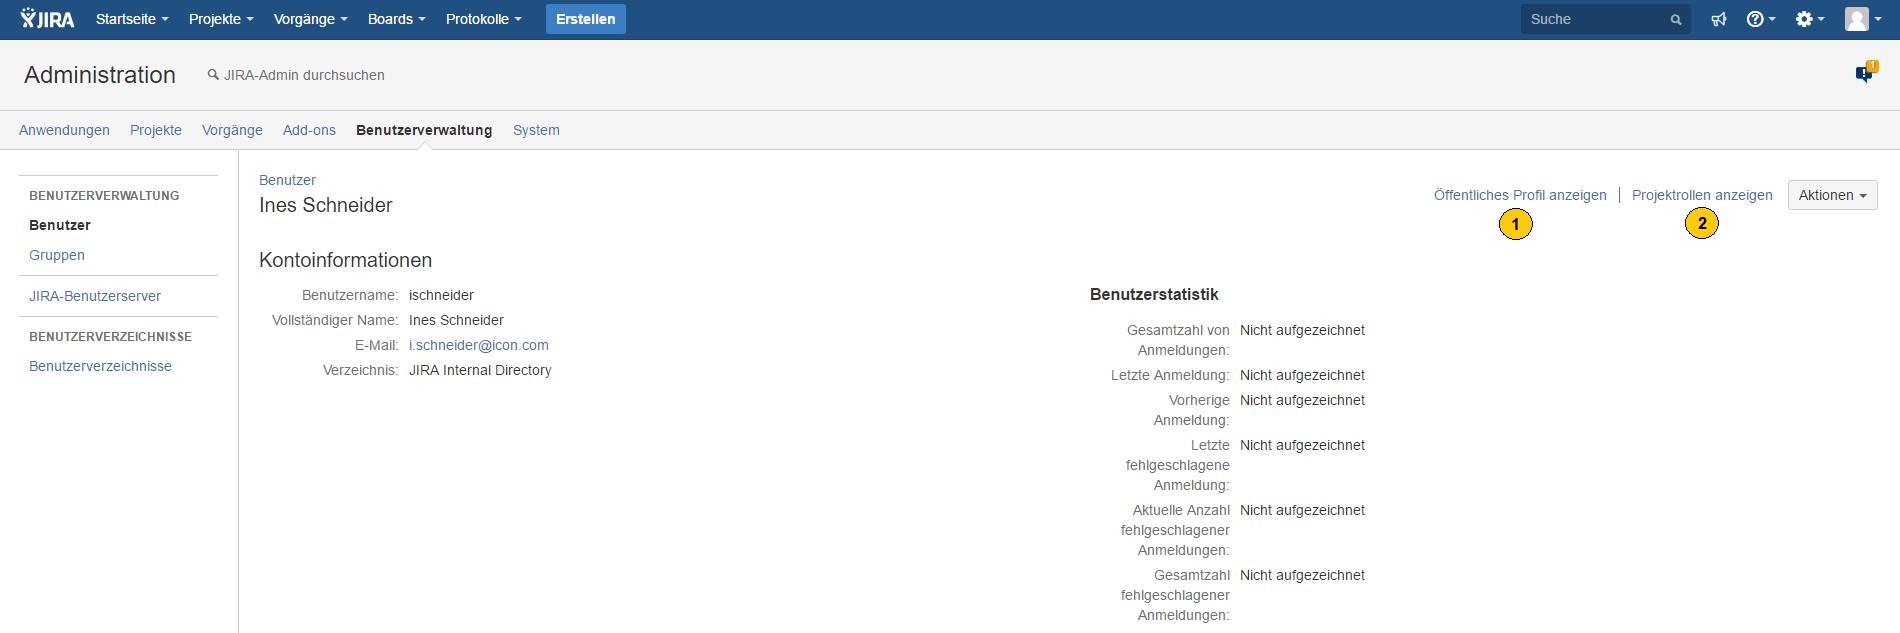 Atlassian JIRA - Benutzerverwaltung - Überblick Nutzer